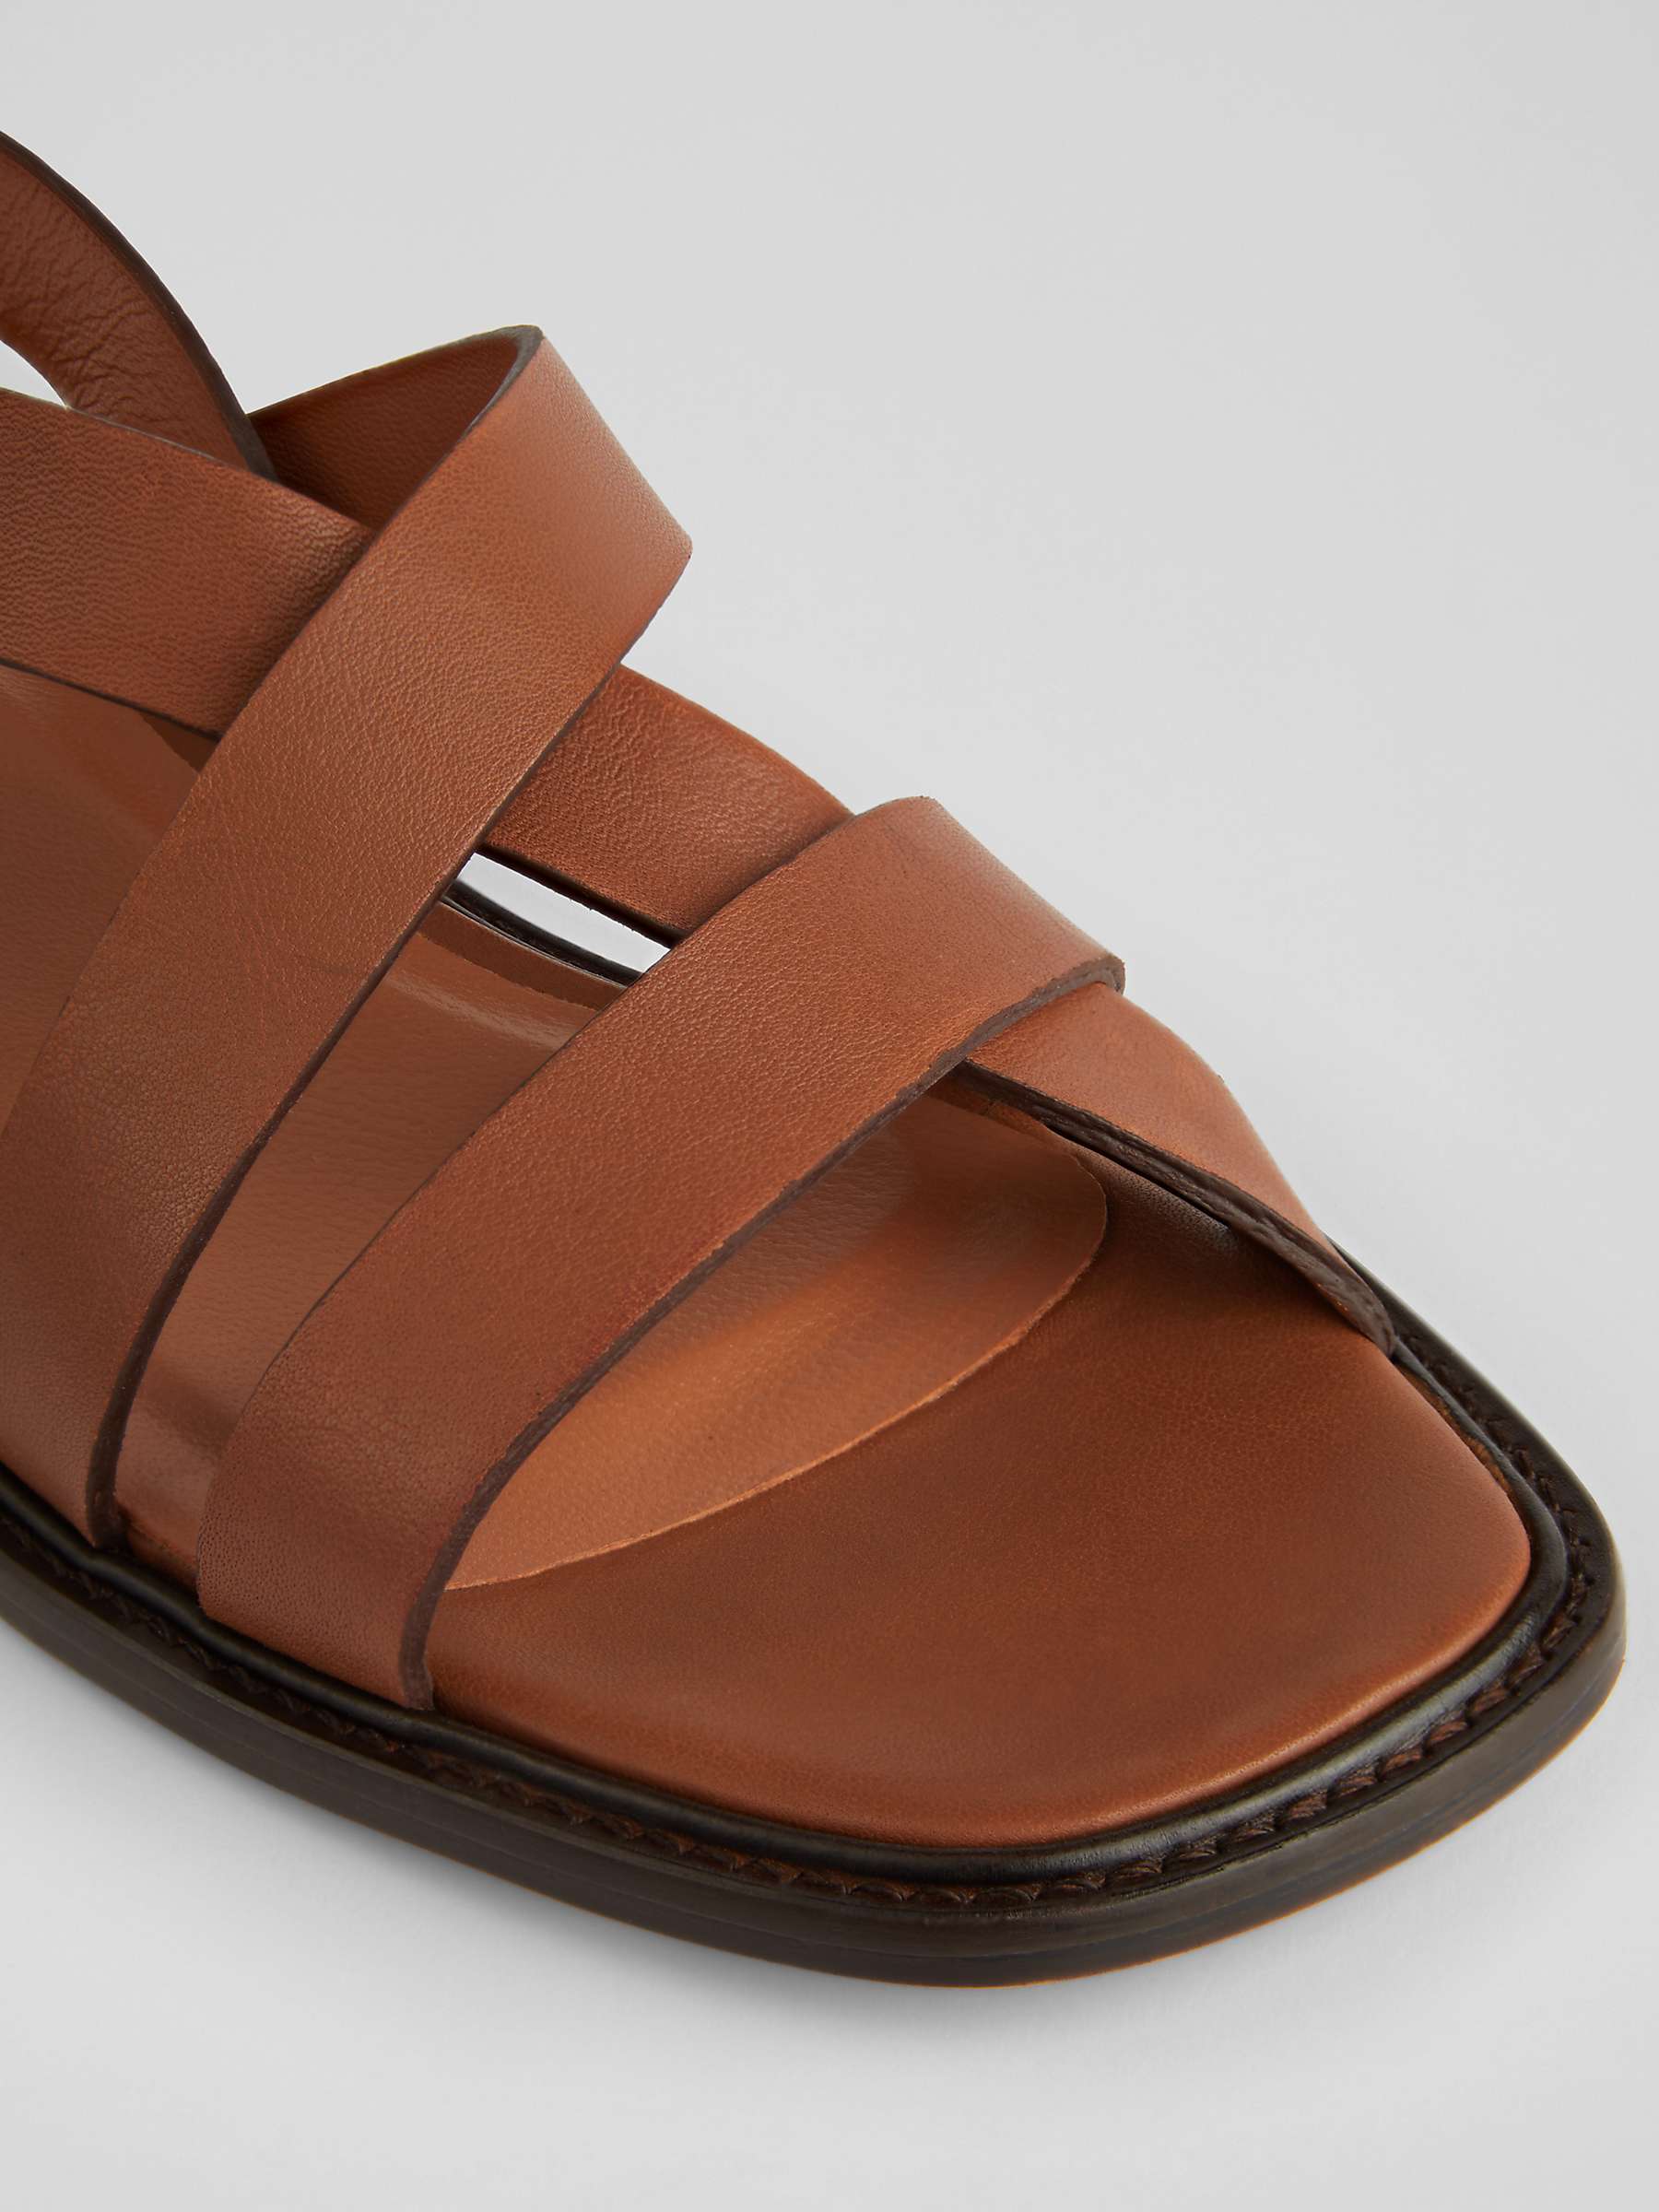 Buy L.K.Bennett Telma Nappa Leather Flat Sandals, Chocolate Online at johnlewis.com